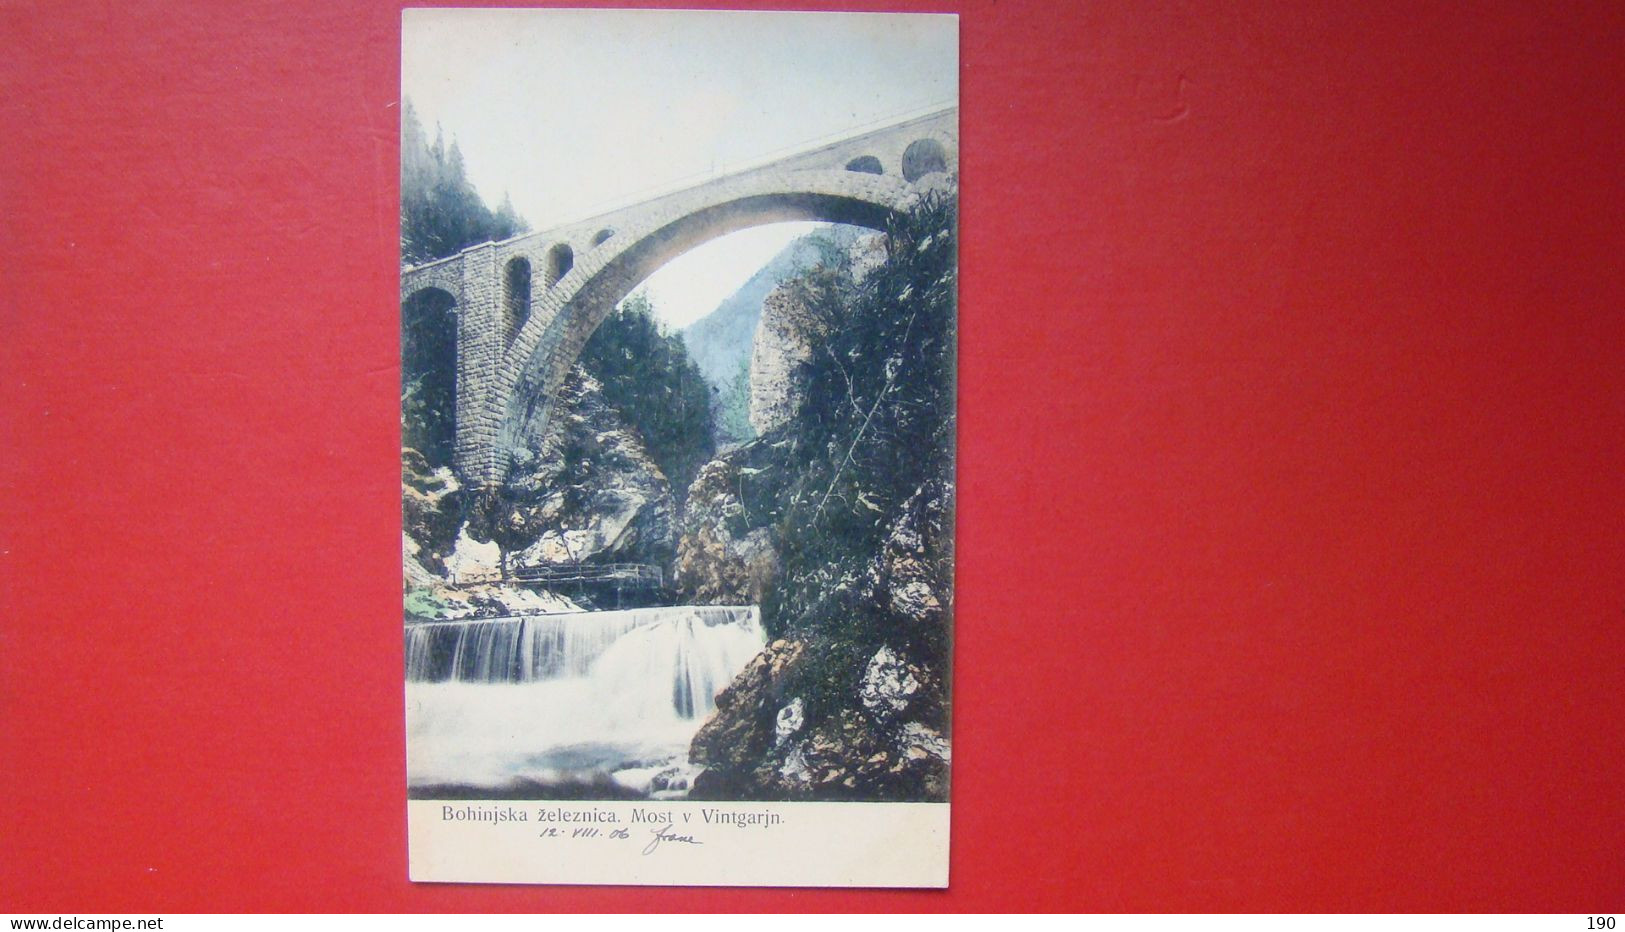 Bohinjska Zeleznica.Most V Vintgarju.Bohinj Railway.The Bridge In Vintgar.Fran Pavlin - Kunstwerken